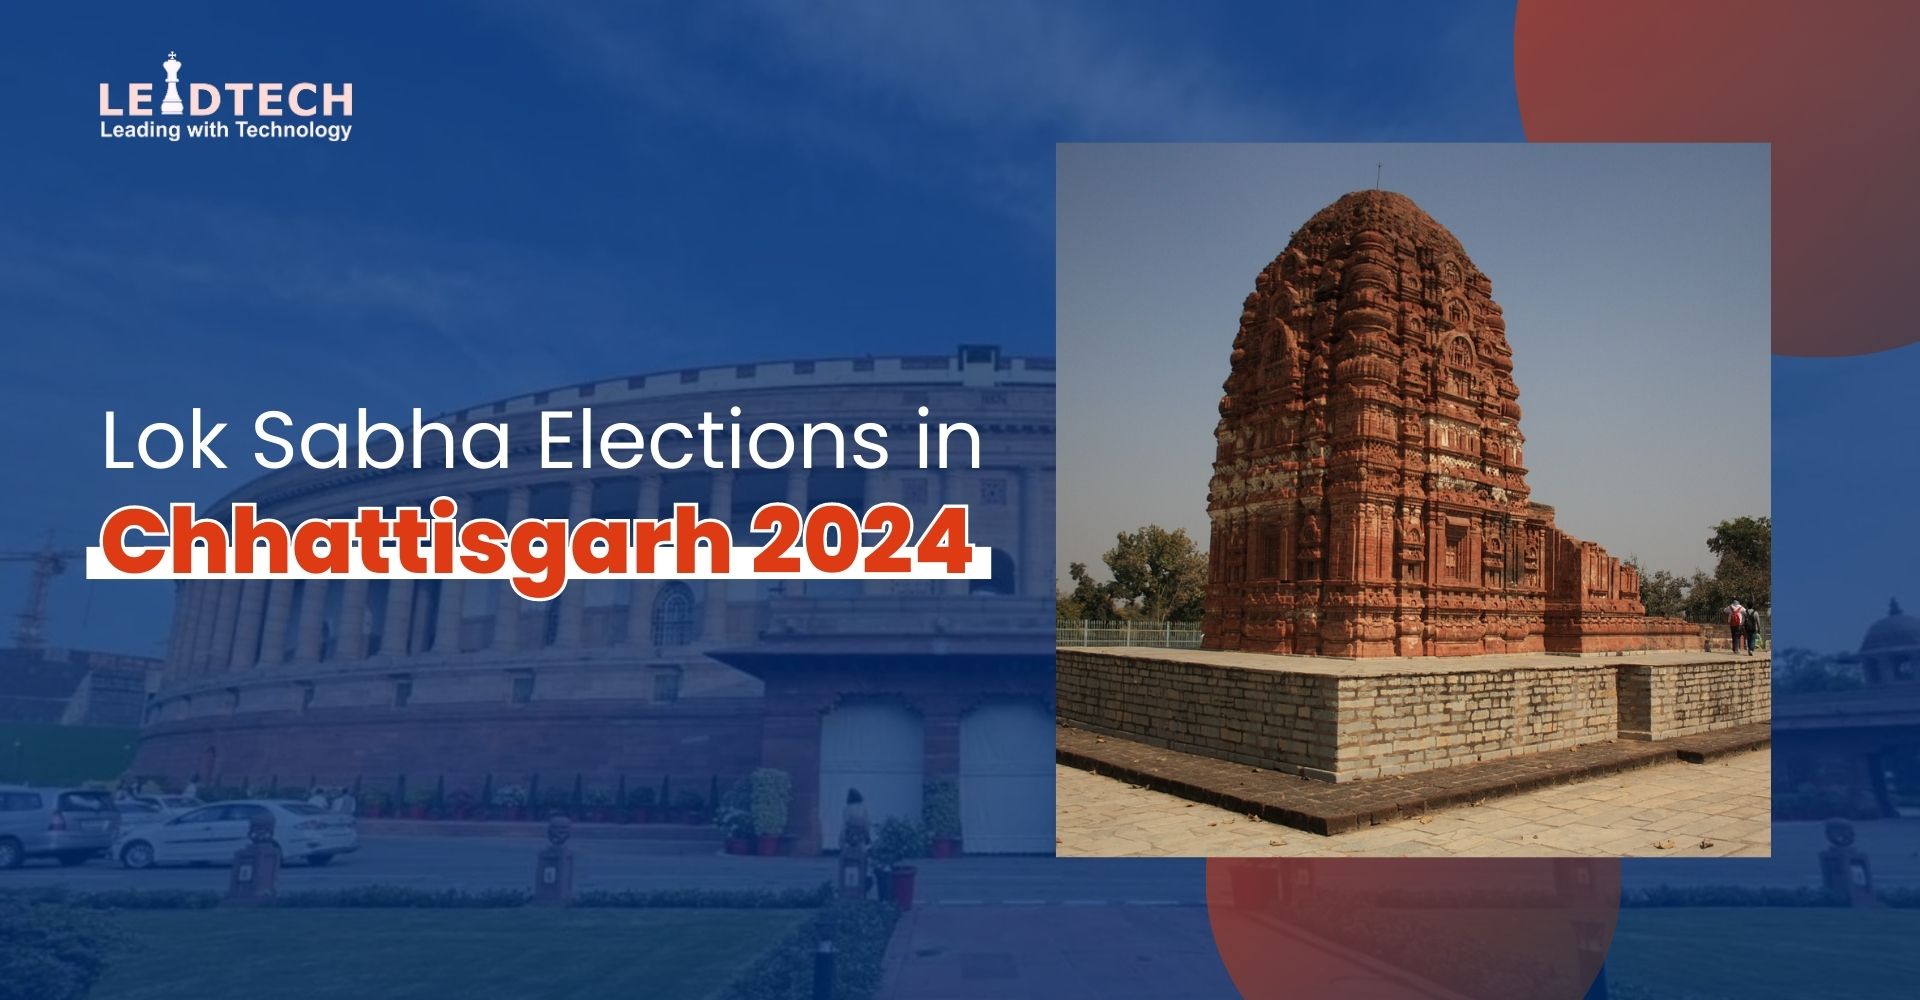 Upcoming Lok Sabha Elections in Chhattisgarh 2024